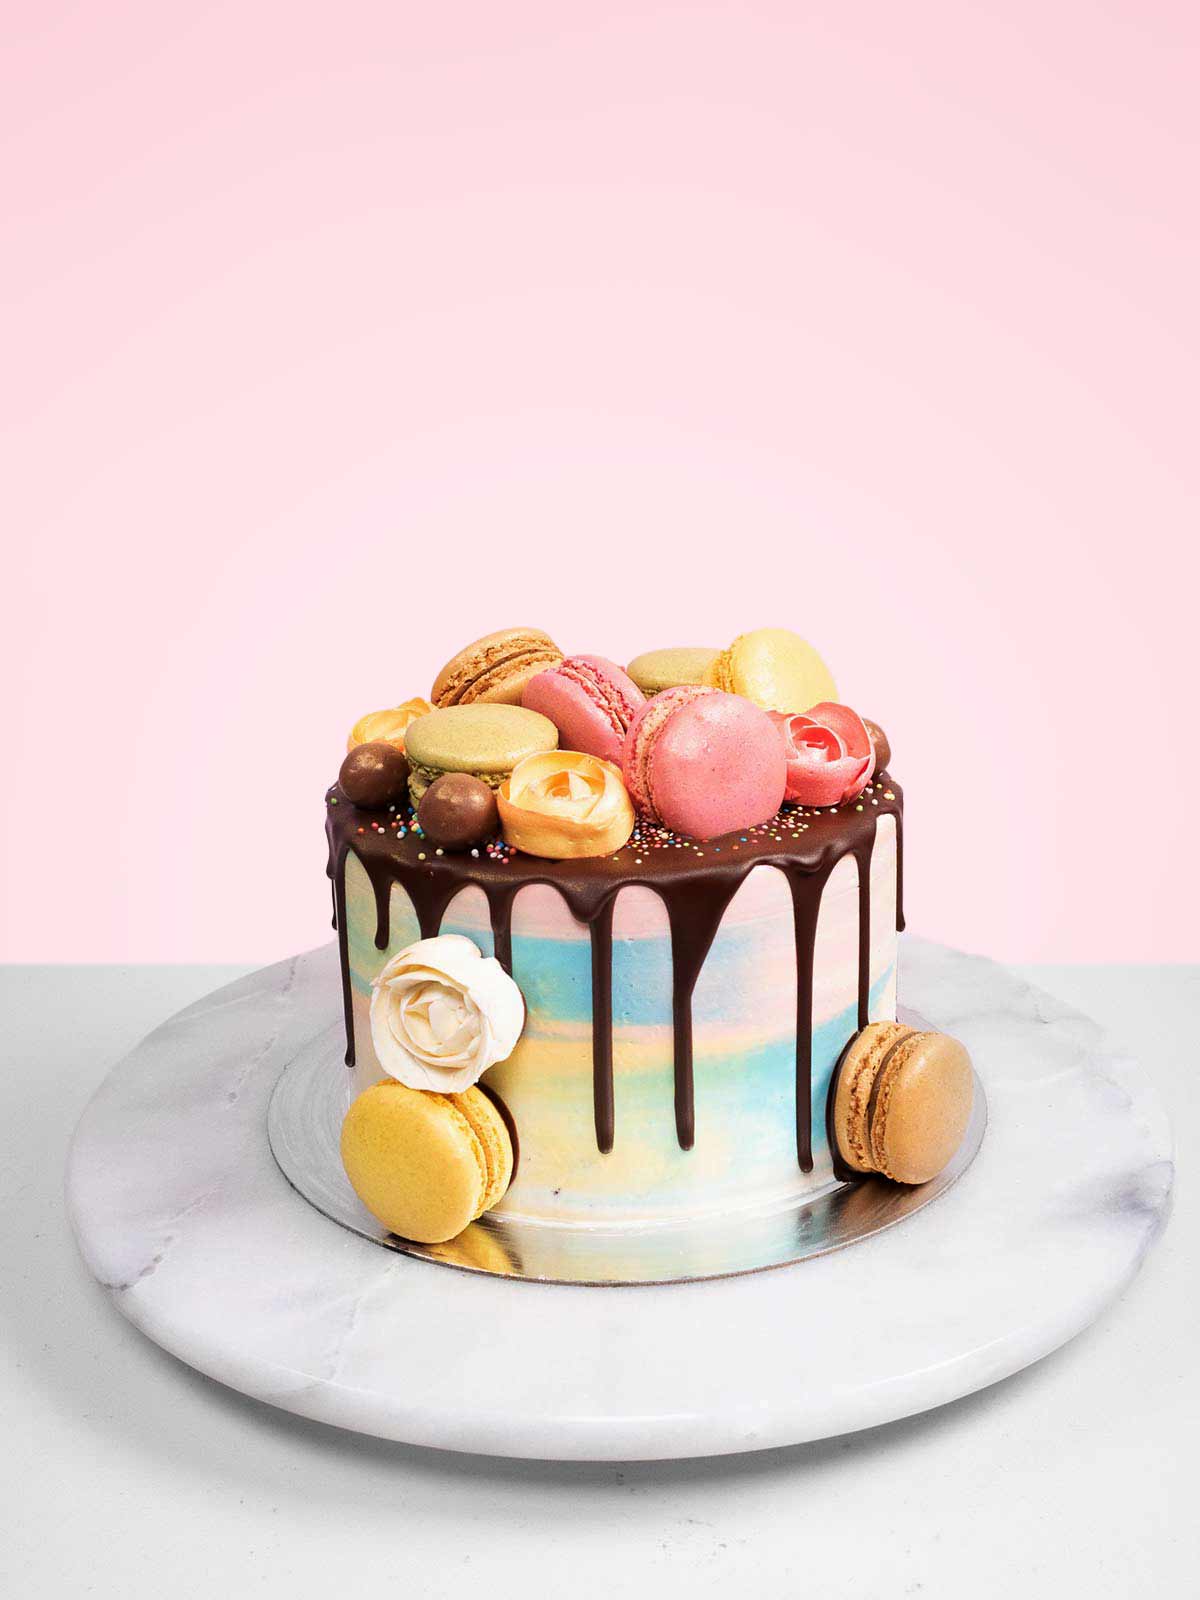 Astonish cakes for making Mom's birthday Memorable in Noida | by  CakeNGifts.in | Medium